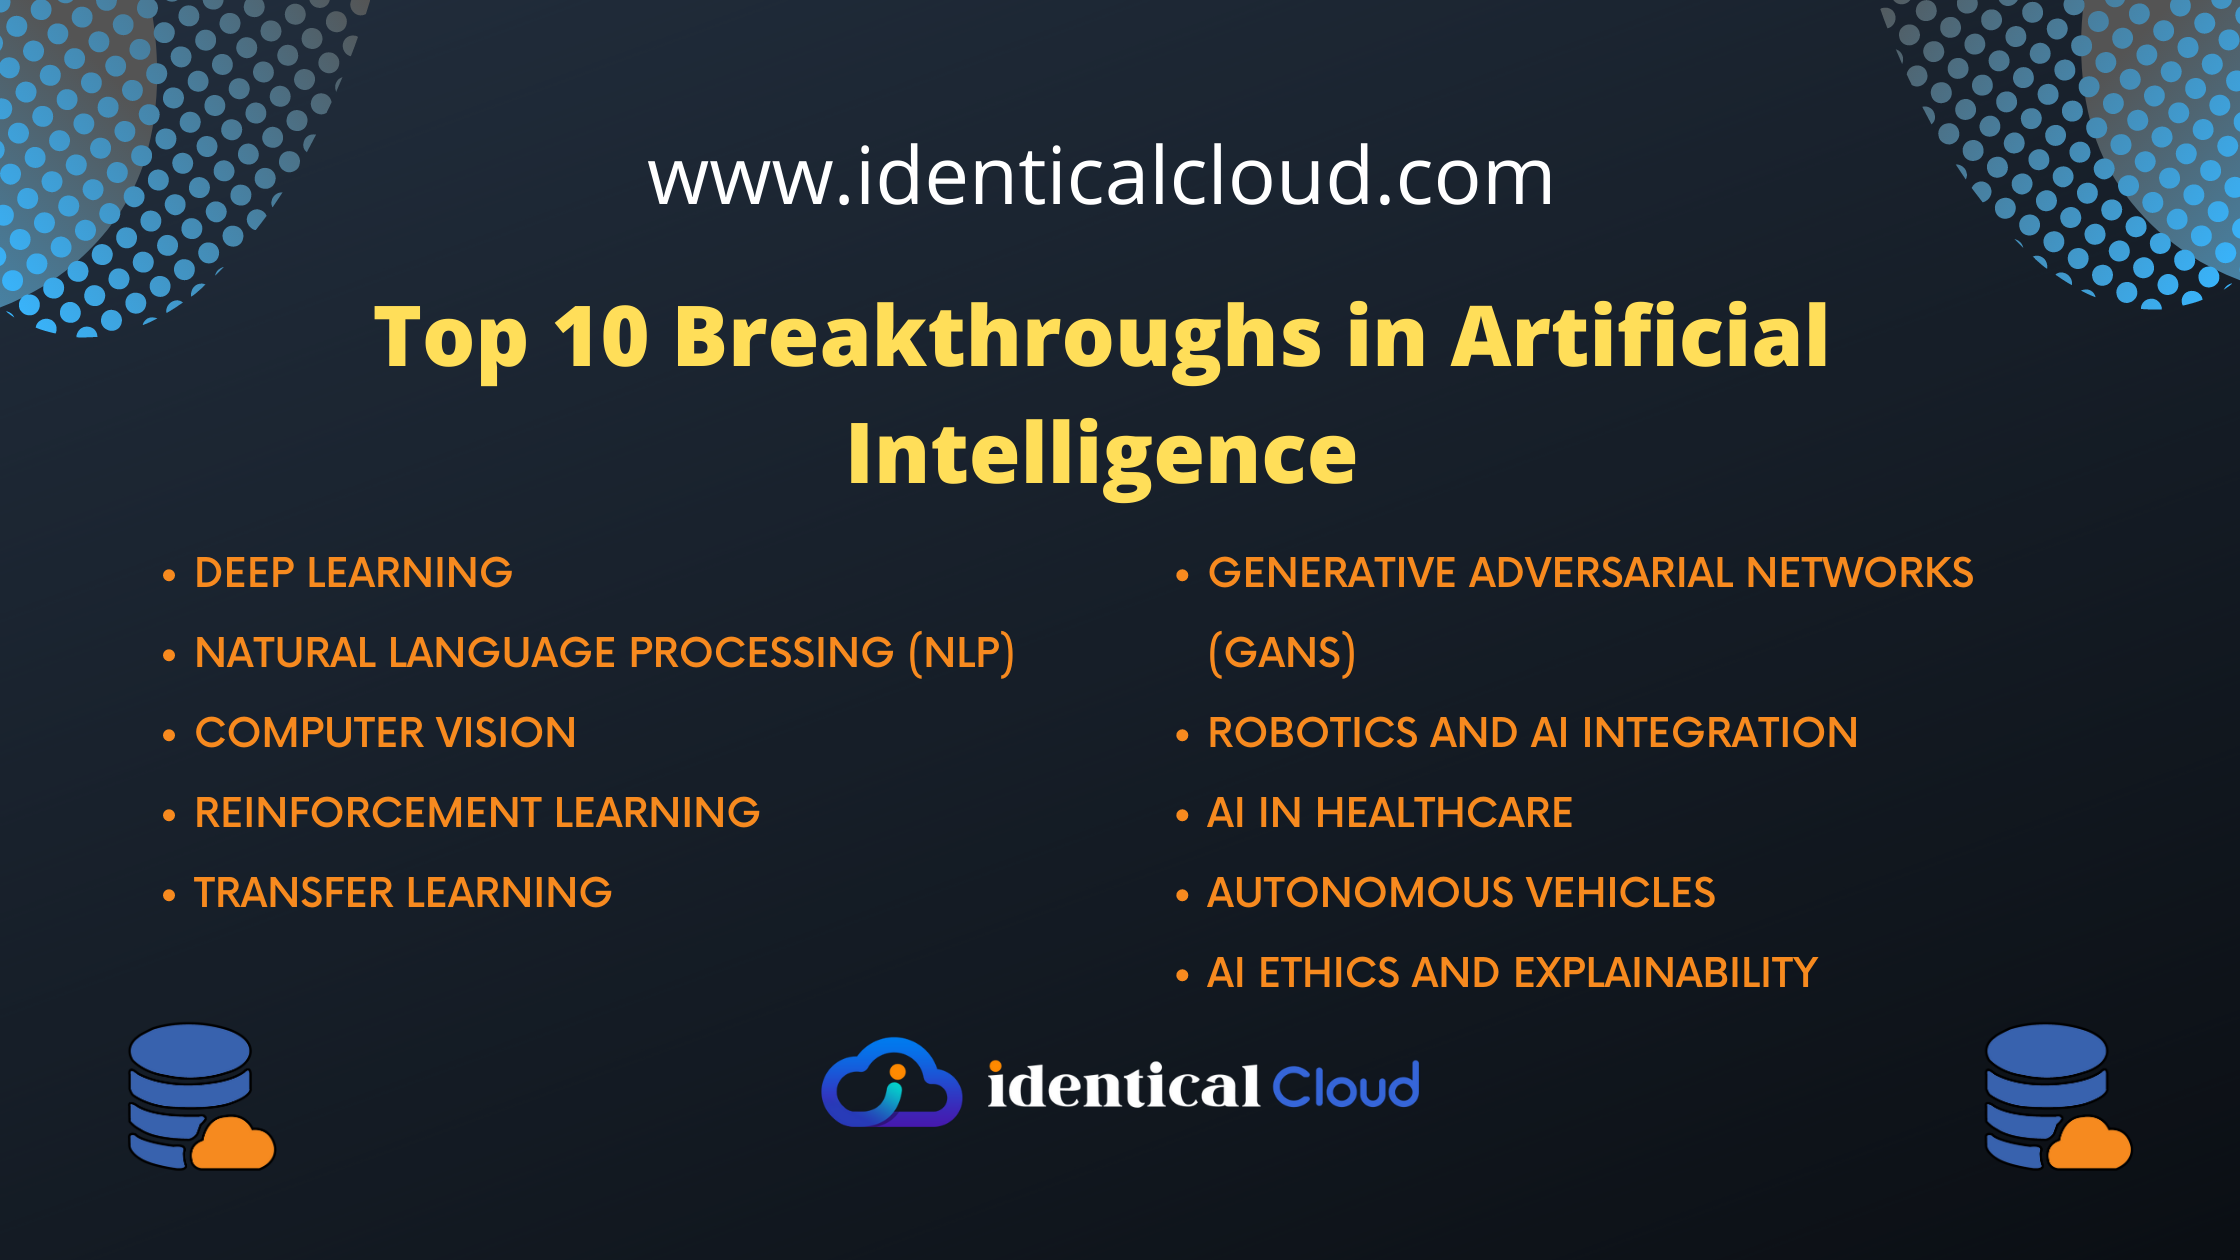 Top 10 Breakthroughs in Artificial Intelligence - identicalcloud.com